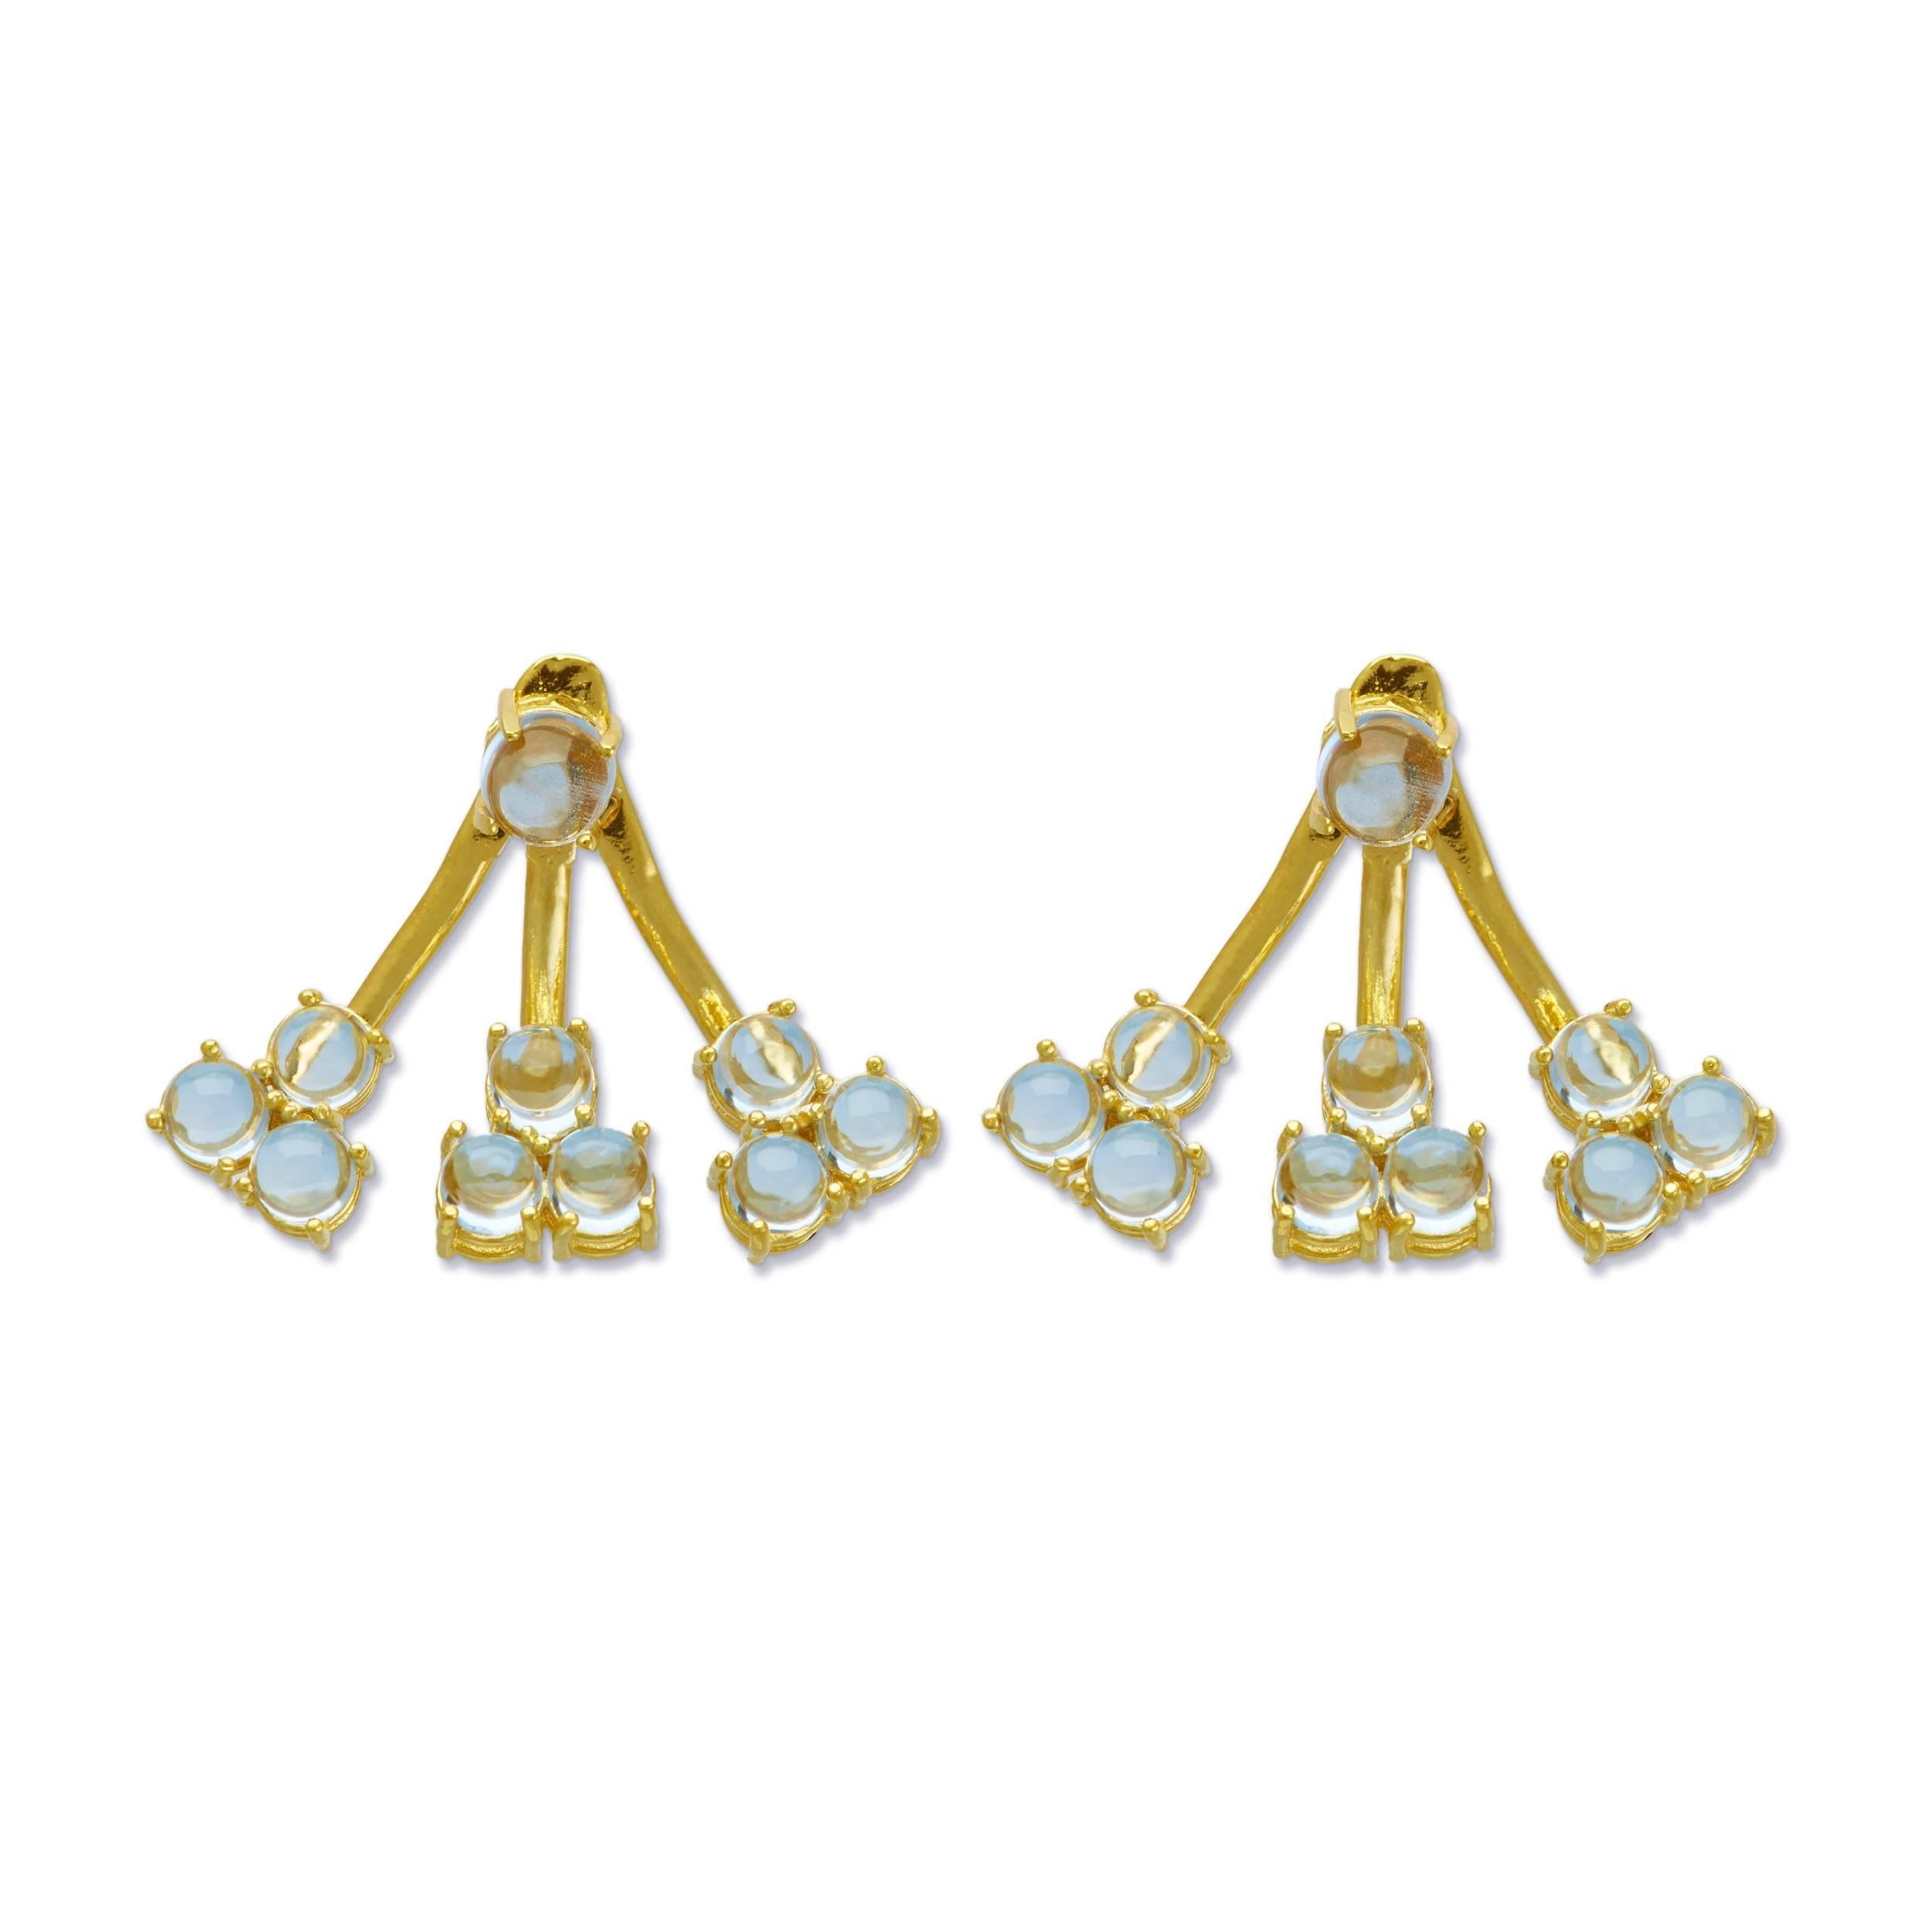 Contemporary Jacket Earrings 18 Karat Yellow Gold Vermeil Aqua Blue Drop Earrings